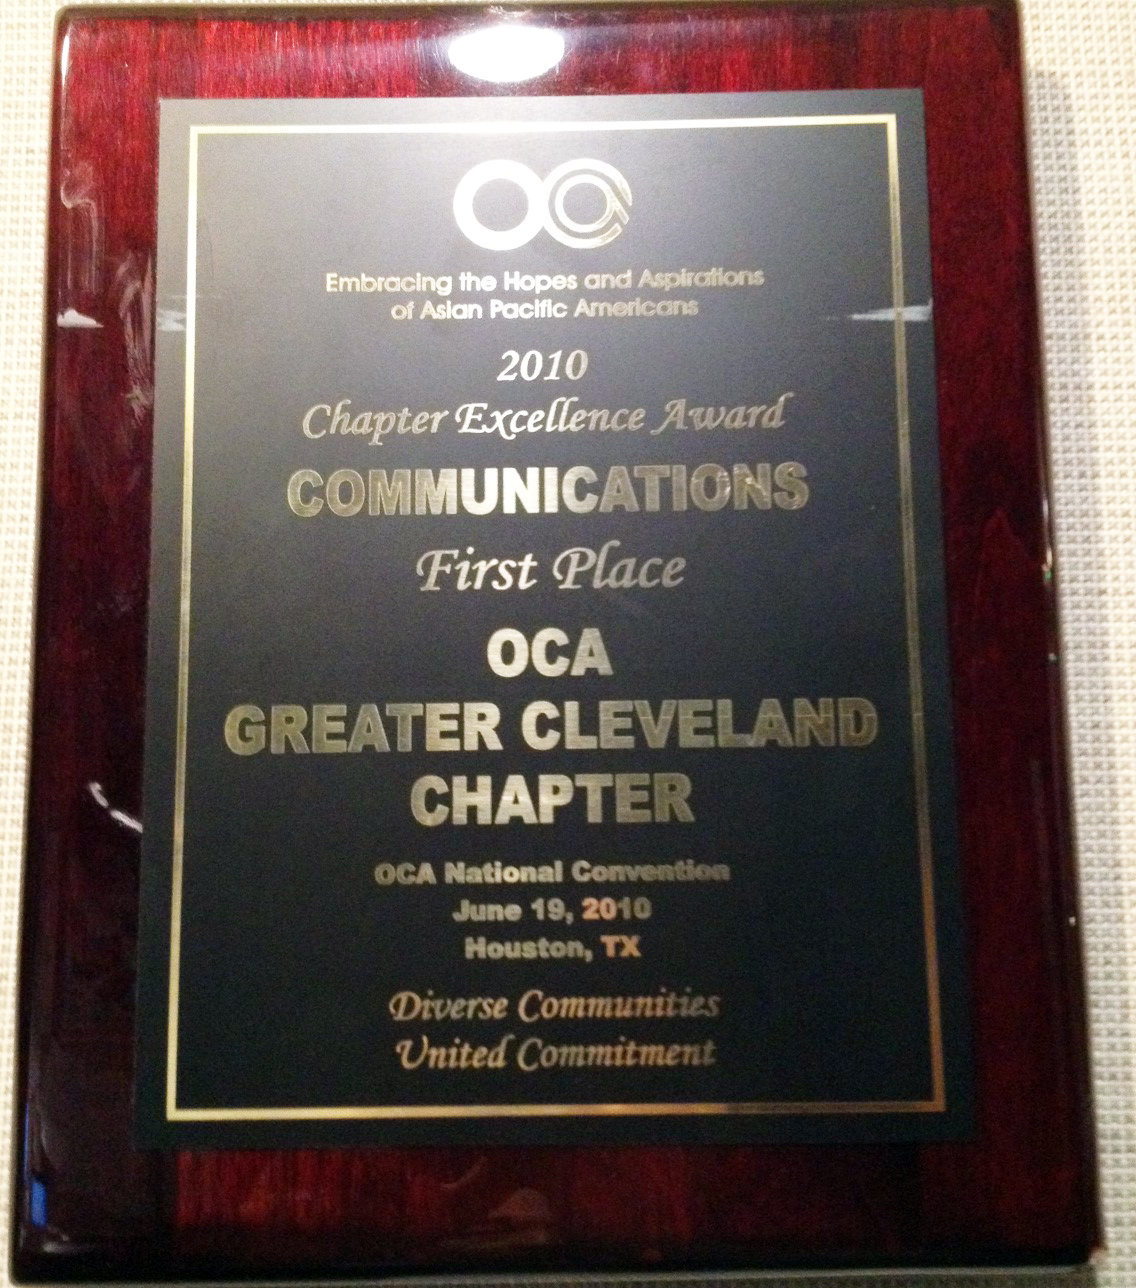 Cleveland’s OCA Image TV Ohio receives OCA’s 2010 Chapter Excellence